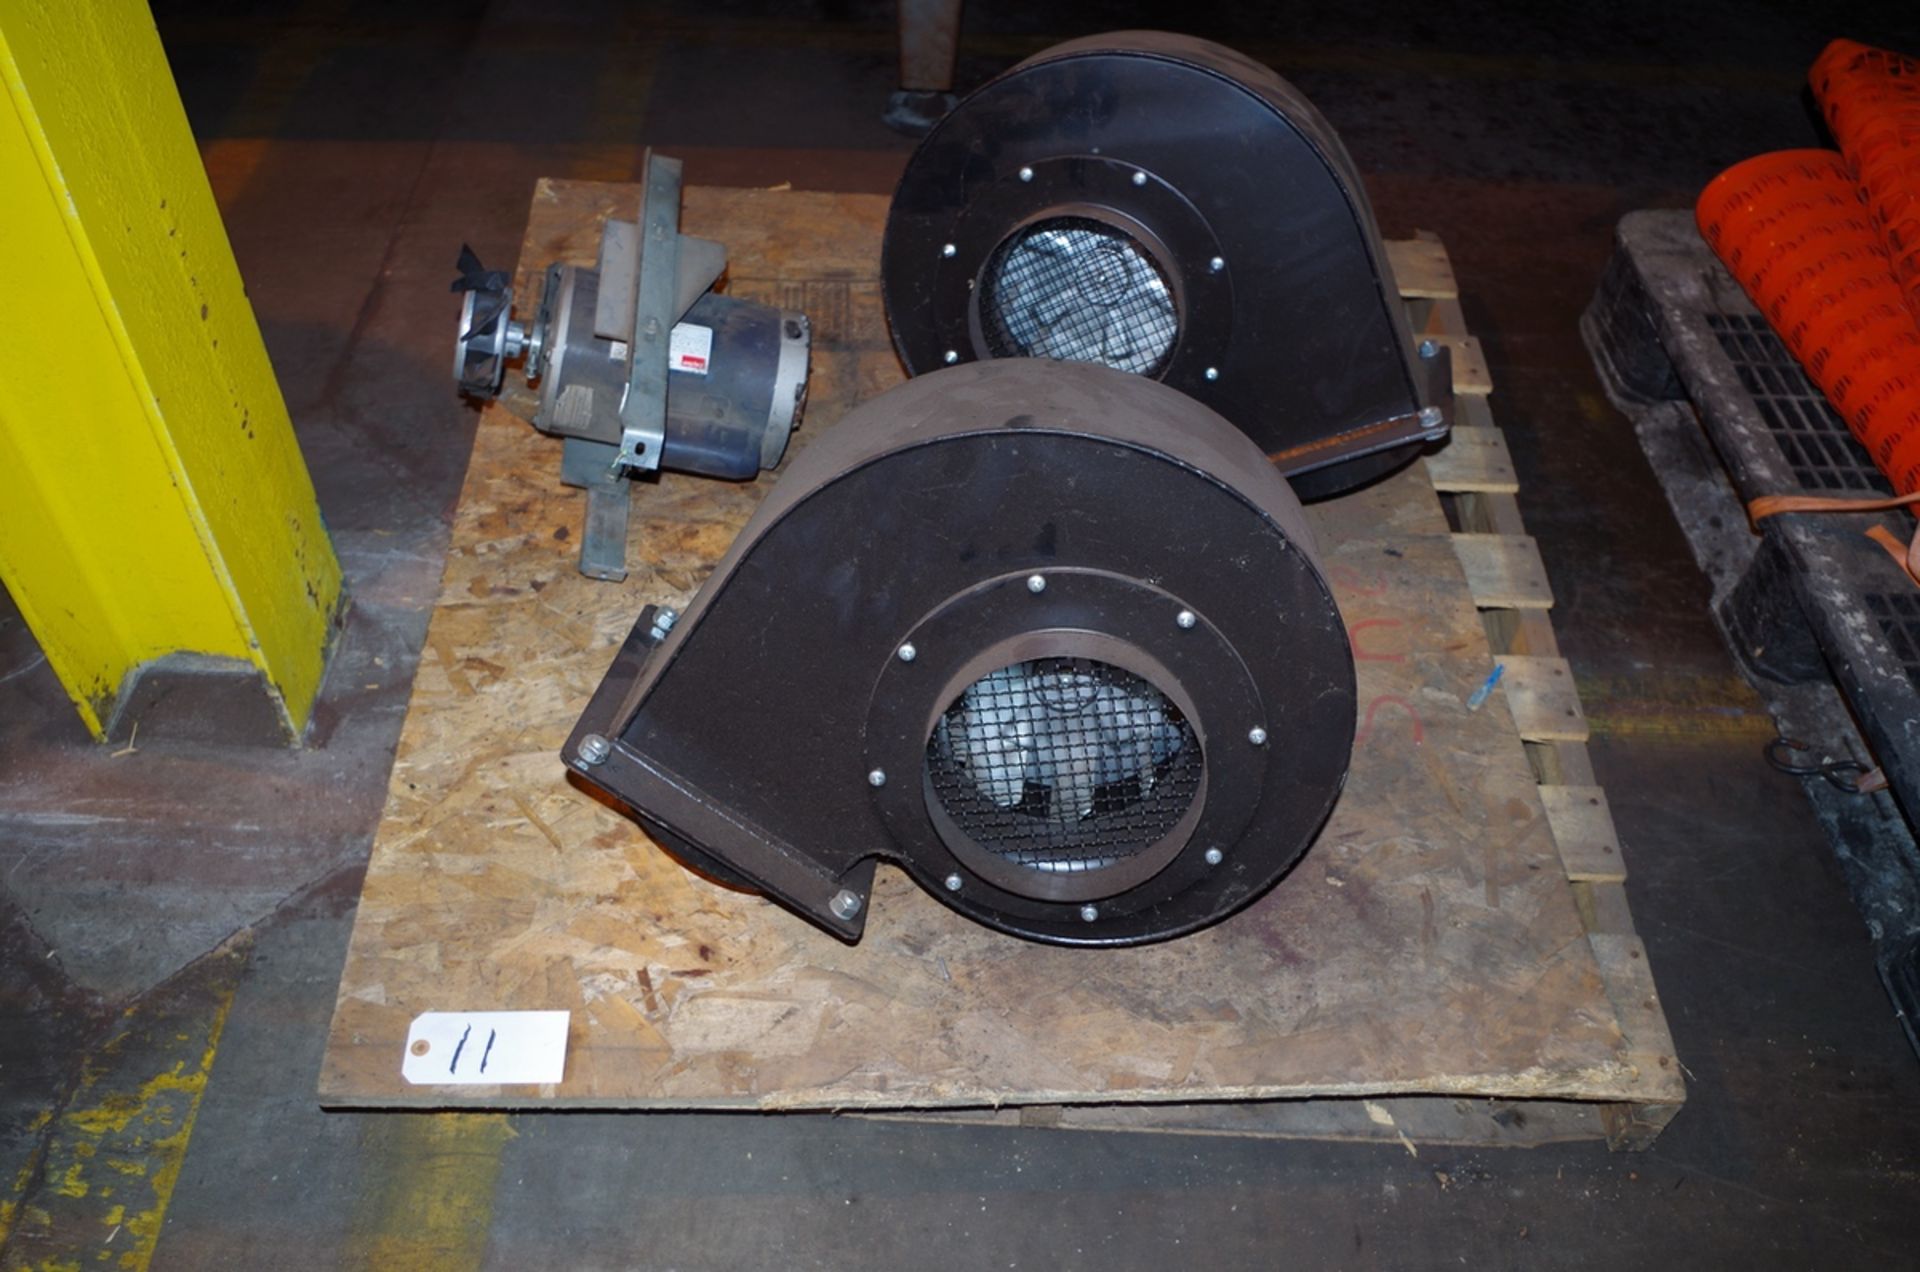 (2) Blower Fan Units, 1.2kW 265/460V 3 phase, and 3/4HP Dayton fan motor, 115V | Rig Fee: $50